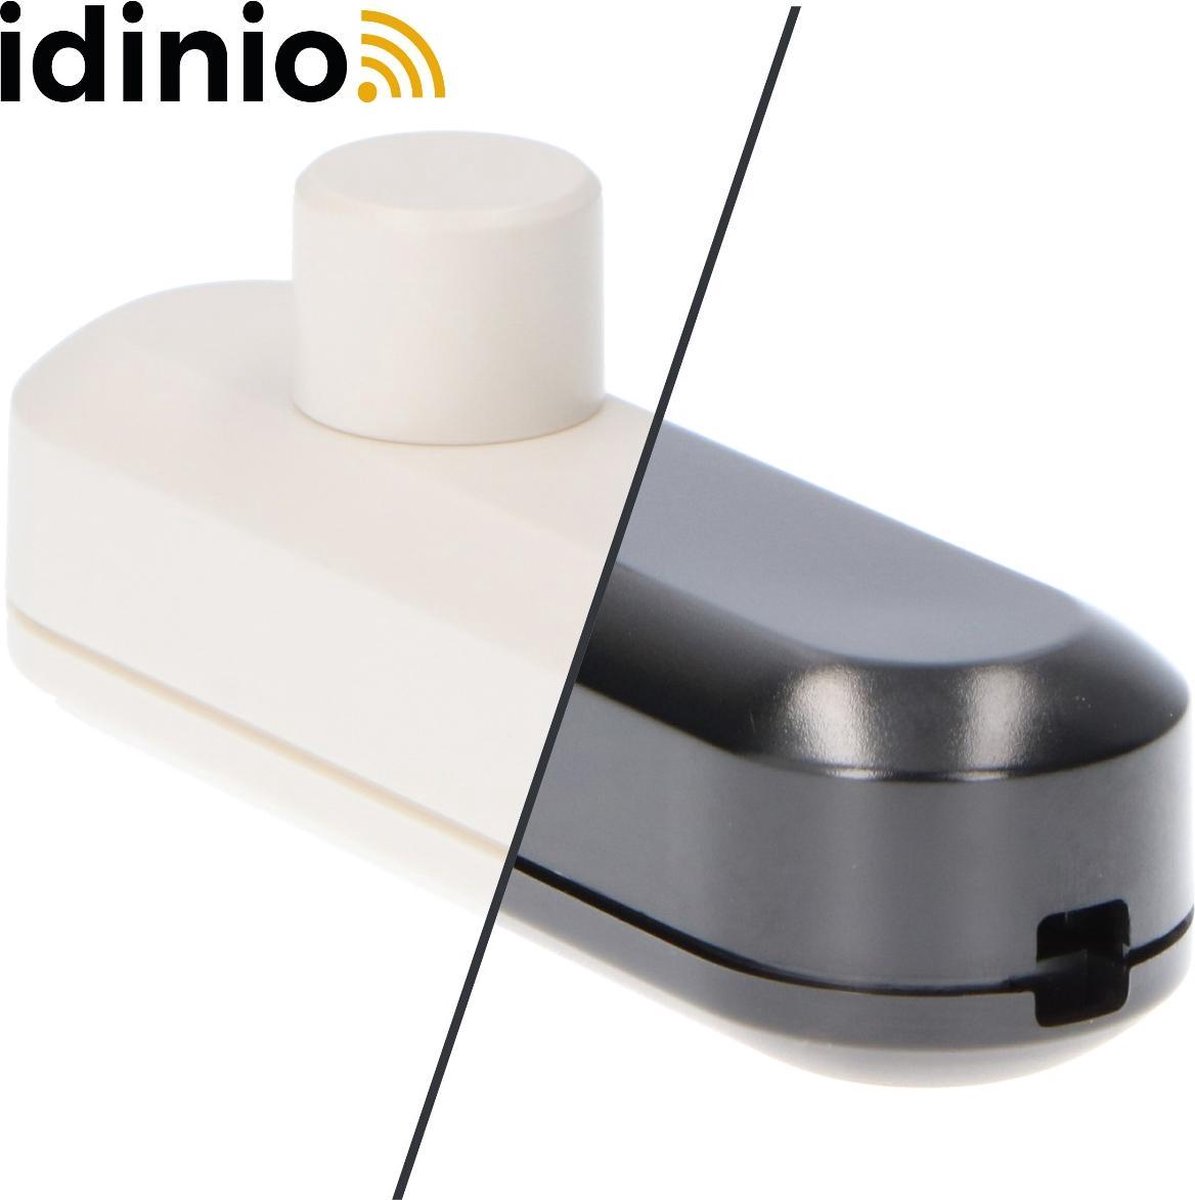 IDINIO Smart LED snoerdimmer - Instelbaar & bedienbaar via Smartphone -  0-100W | bol.com